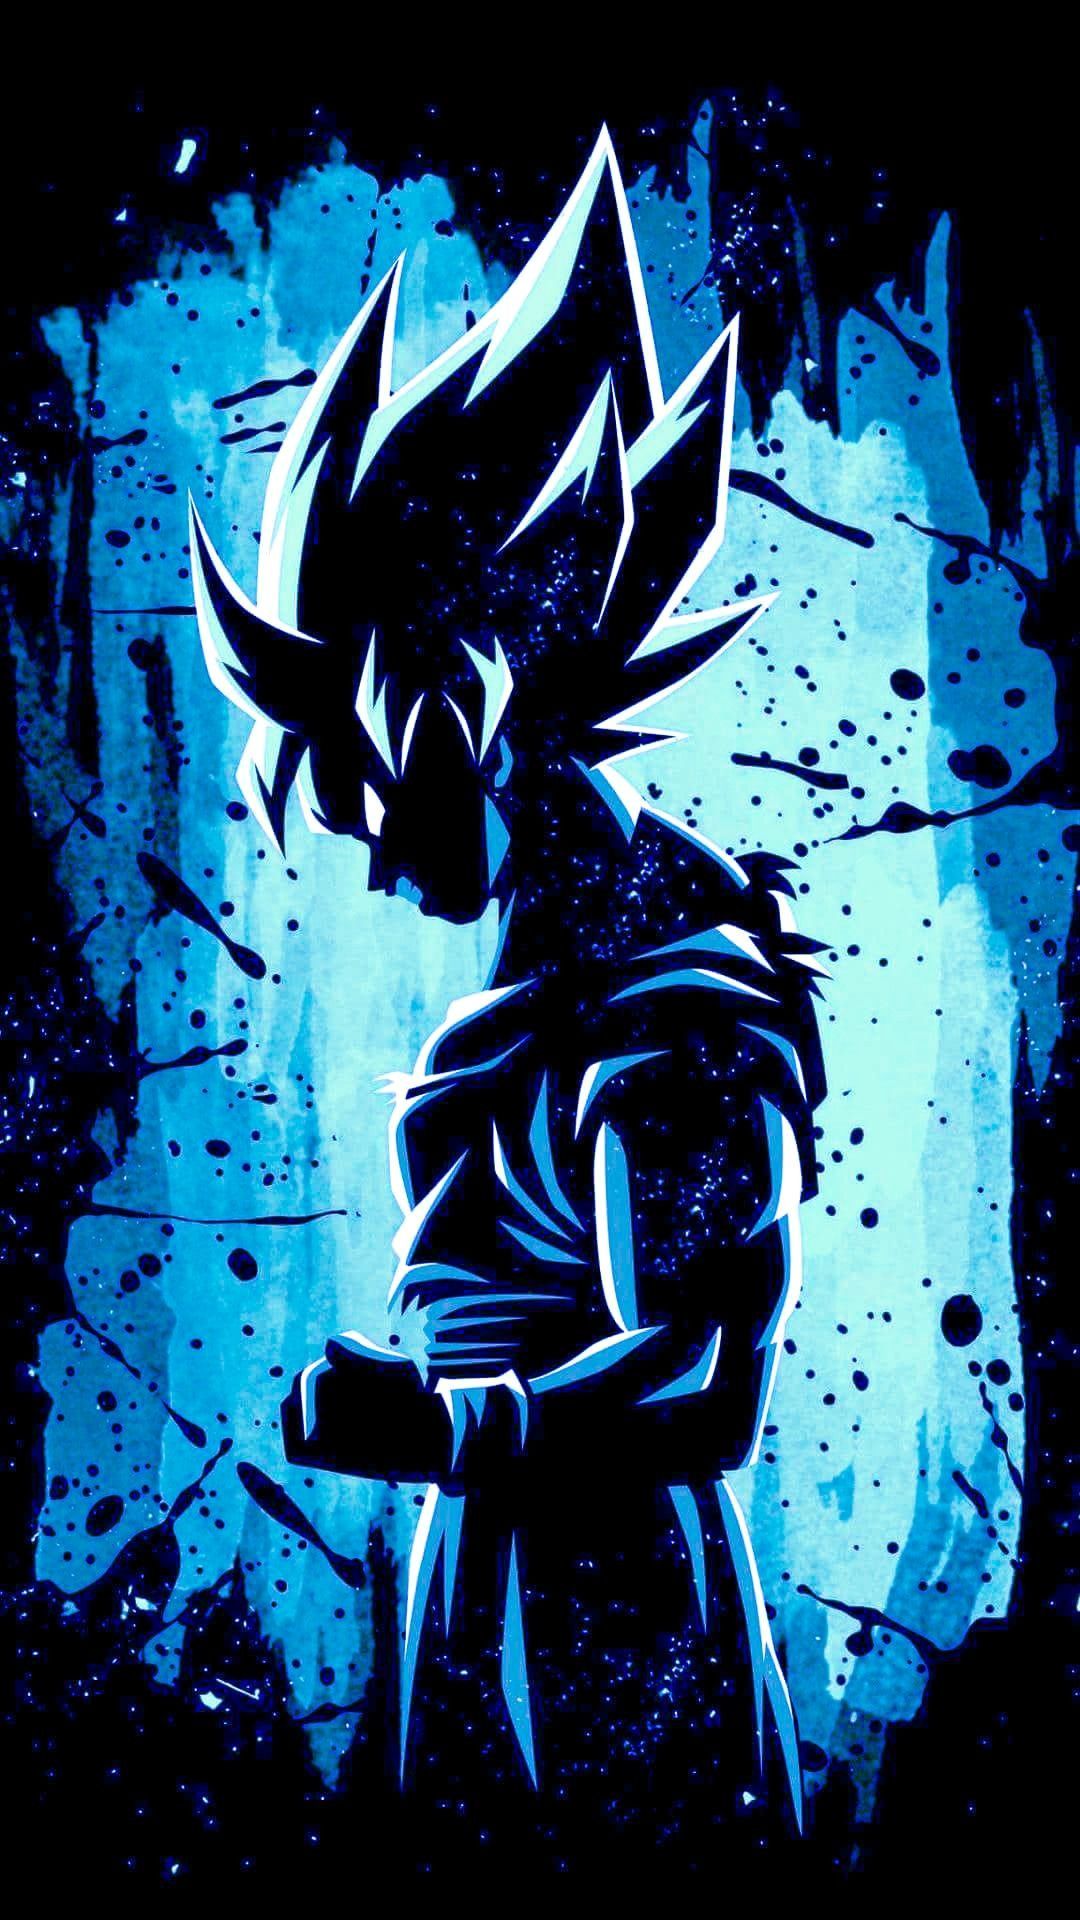 Inspirational Goku Live Wallpaper iPhone 7 Wall Black #wallpaper